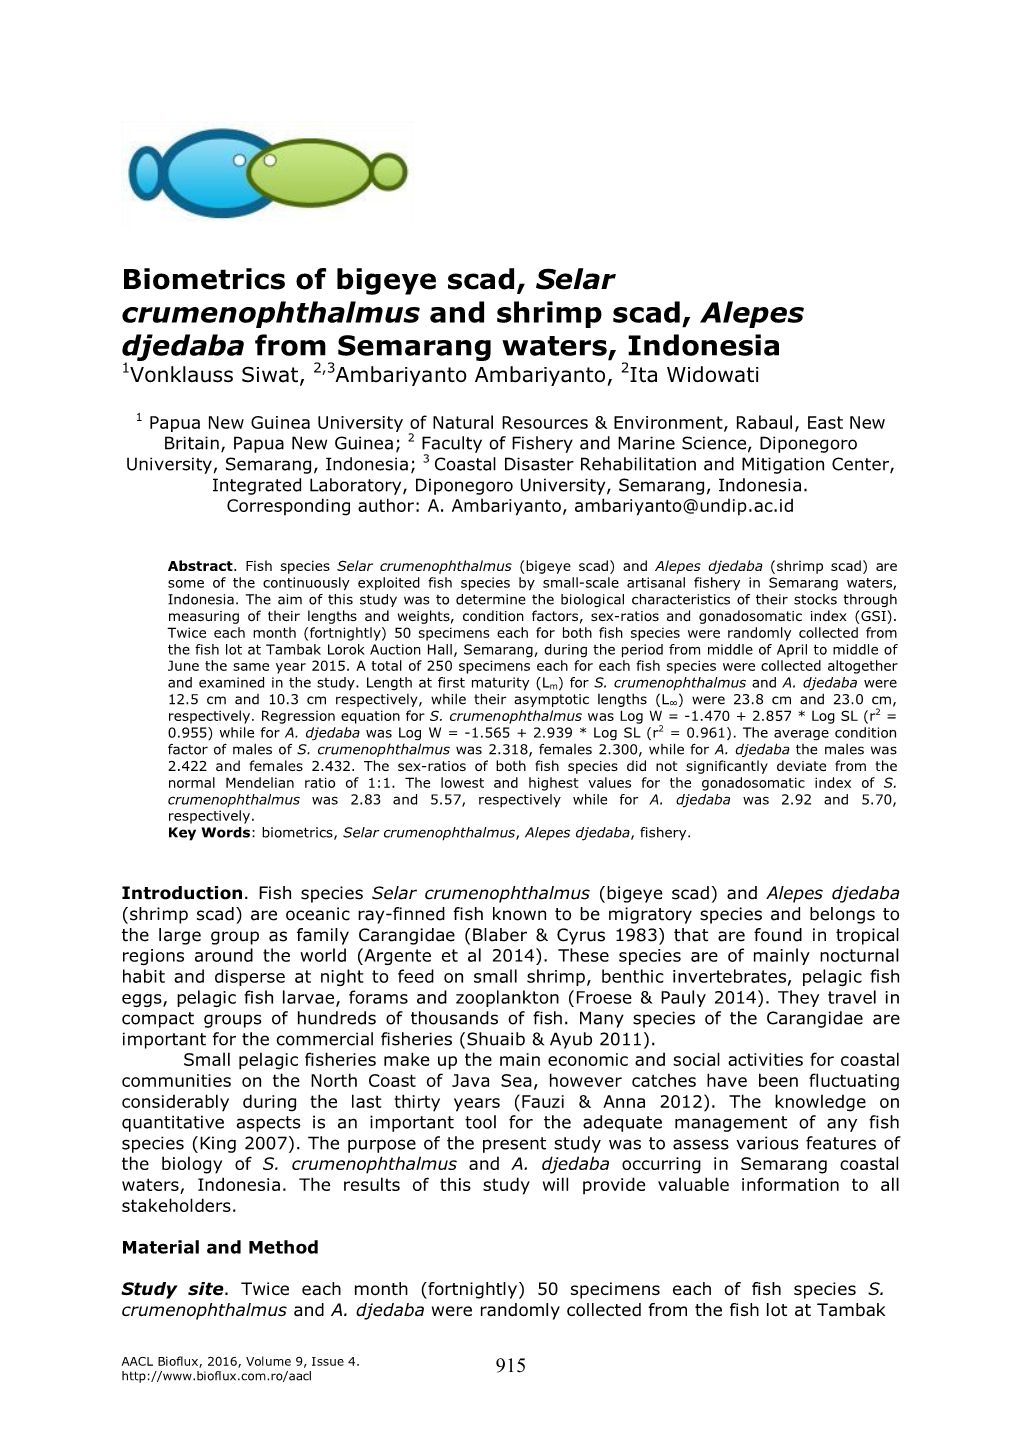 Biometrics of Bigeye Scad, Selar Crumenophthalmus and Shrimp